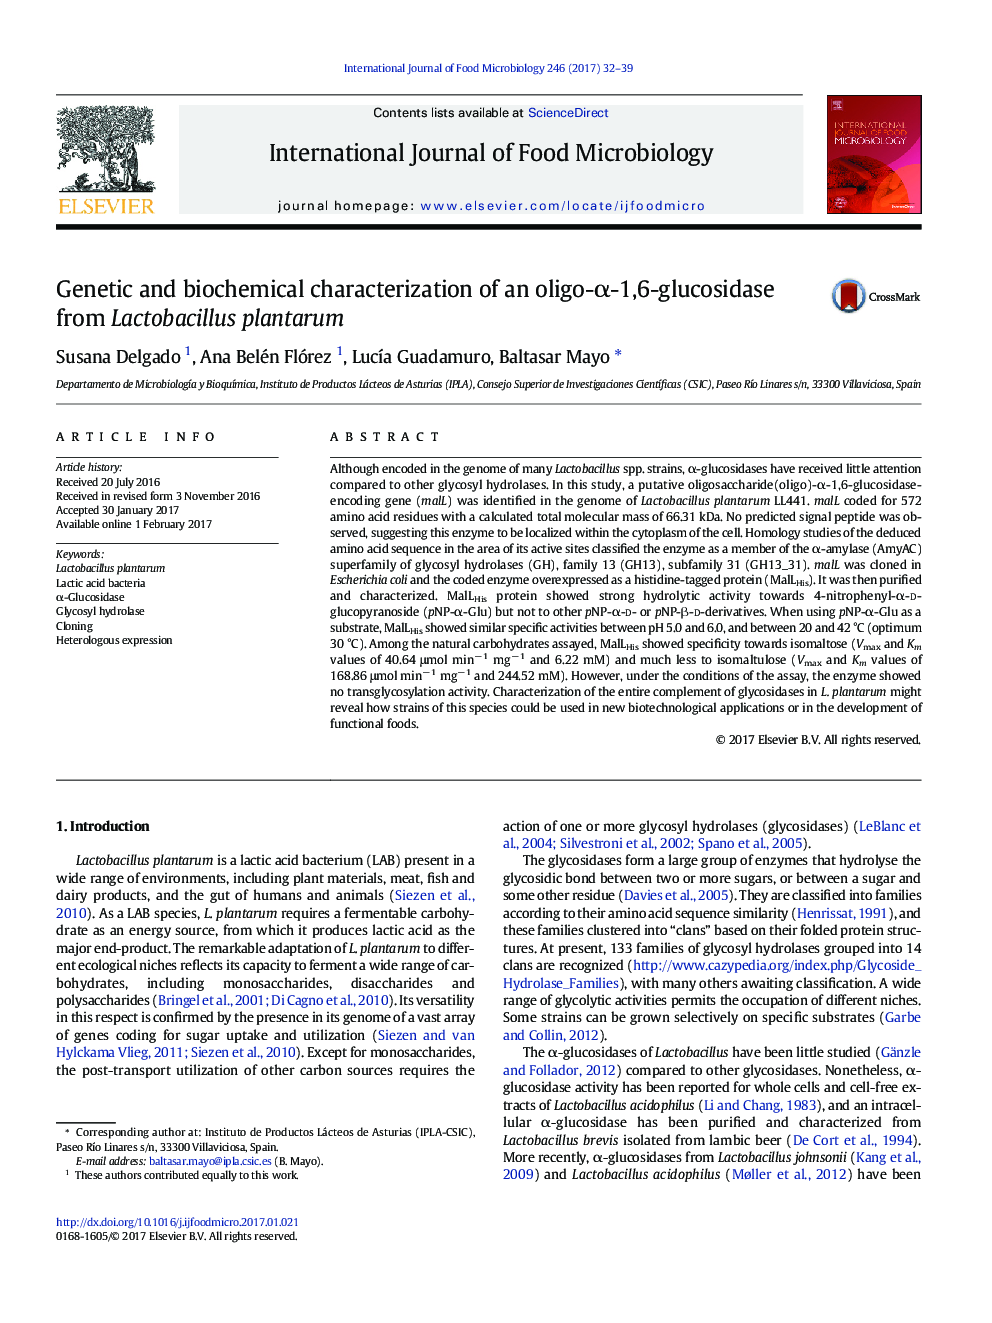 Genetic and biochemical characterization of an oligo-Î±-1,6-glucosidase from Lactobacillus plantarum